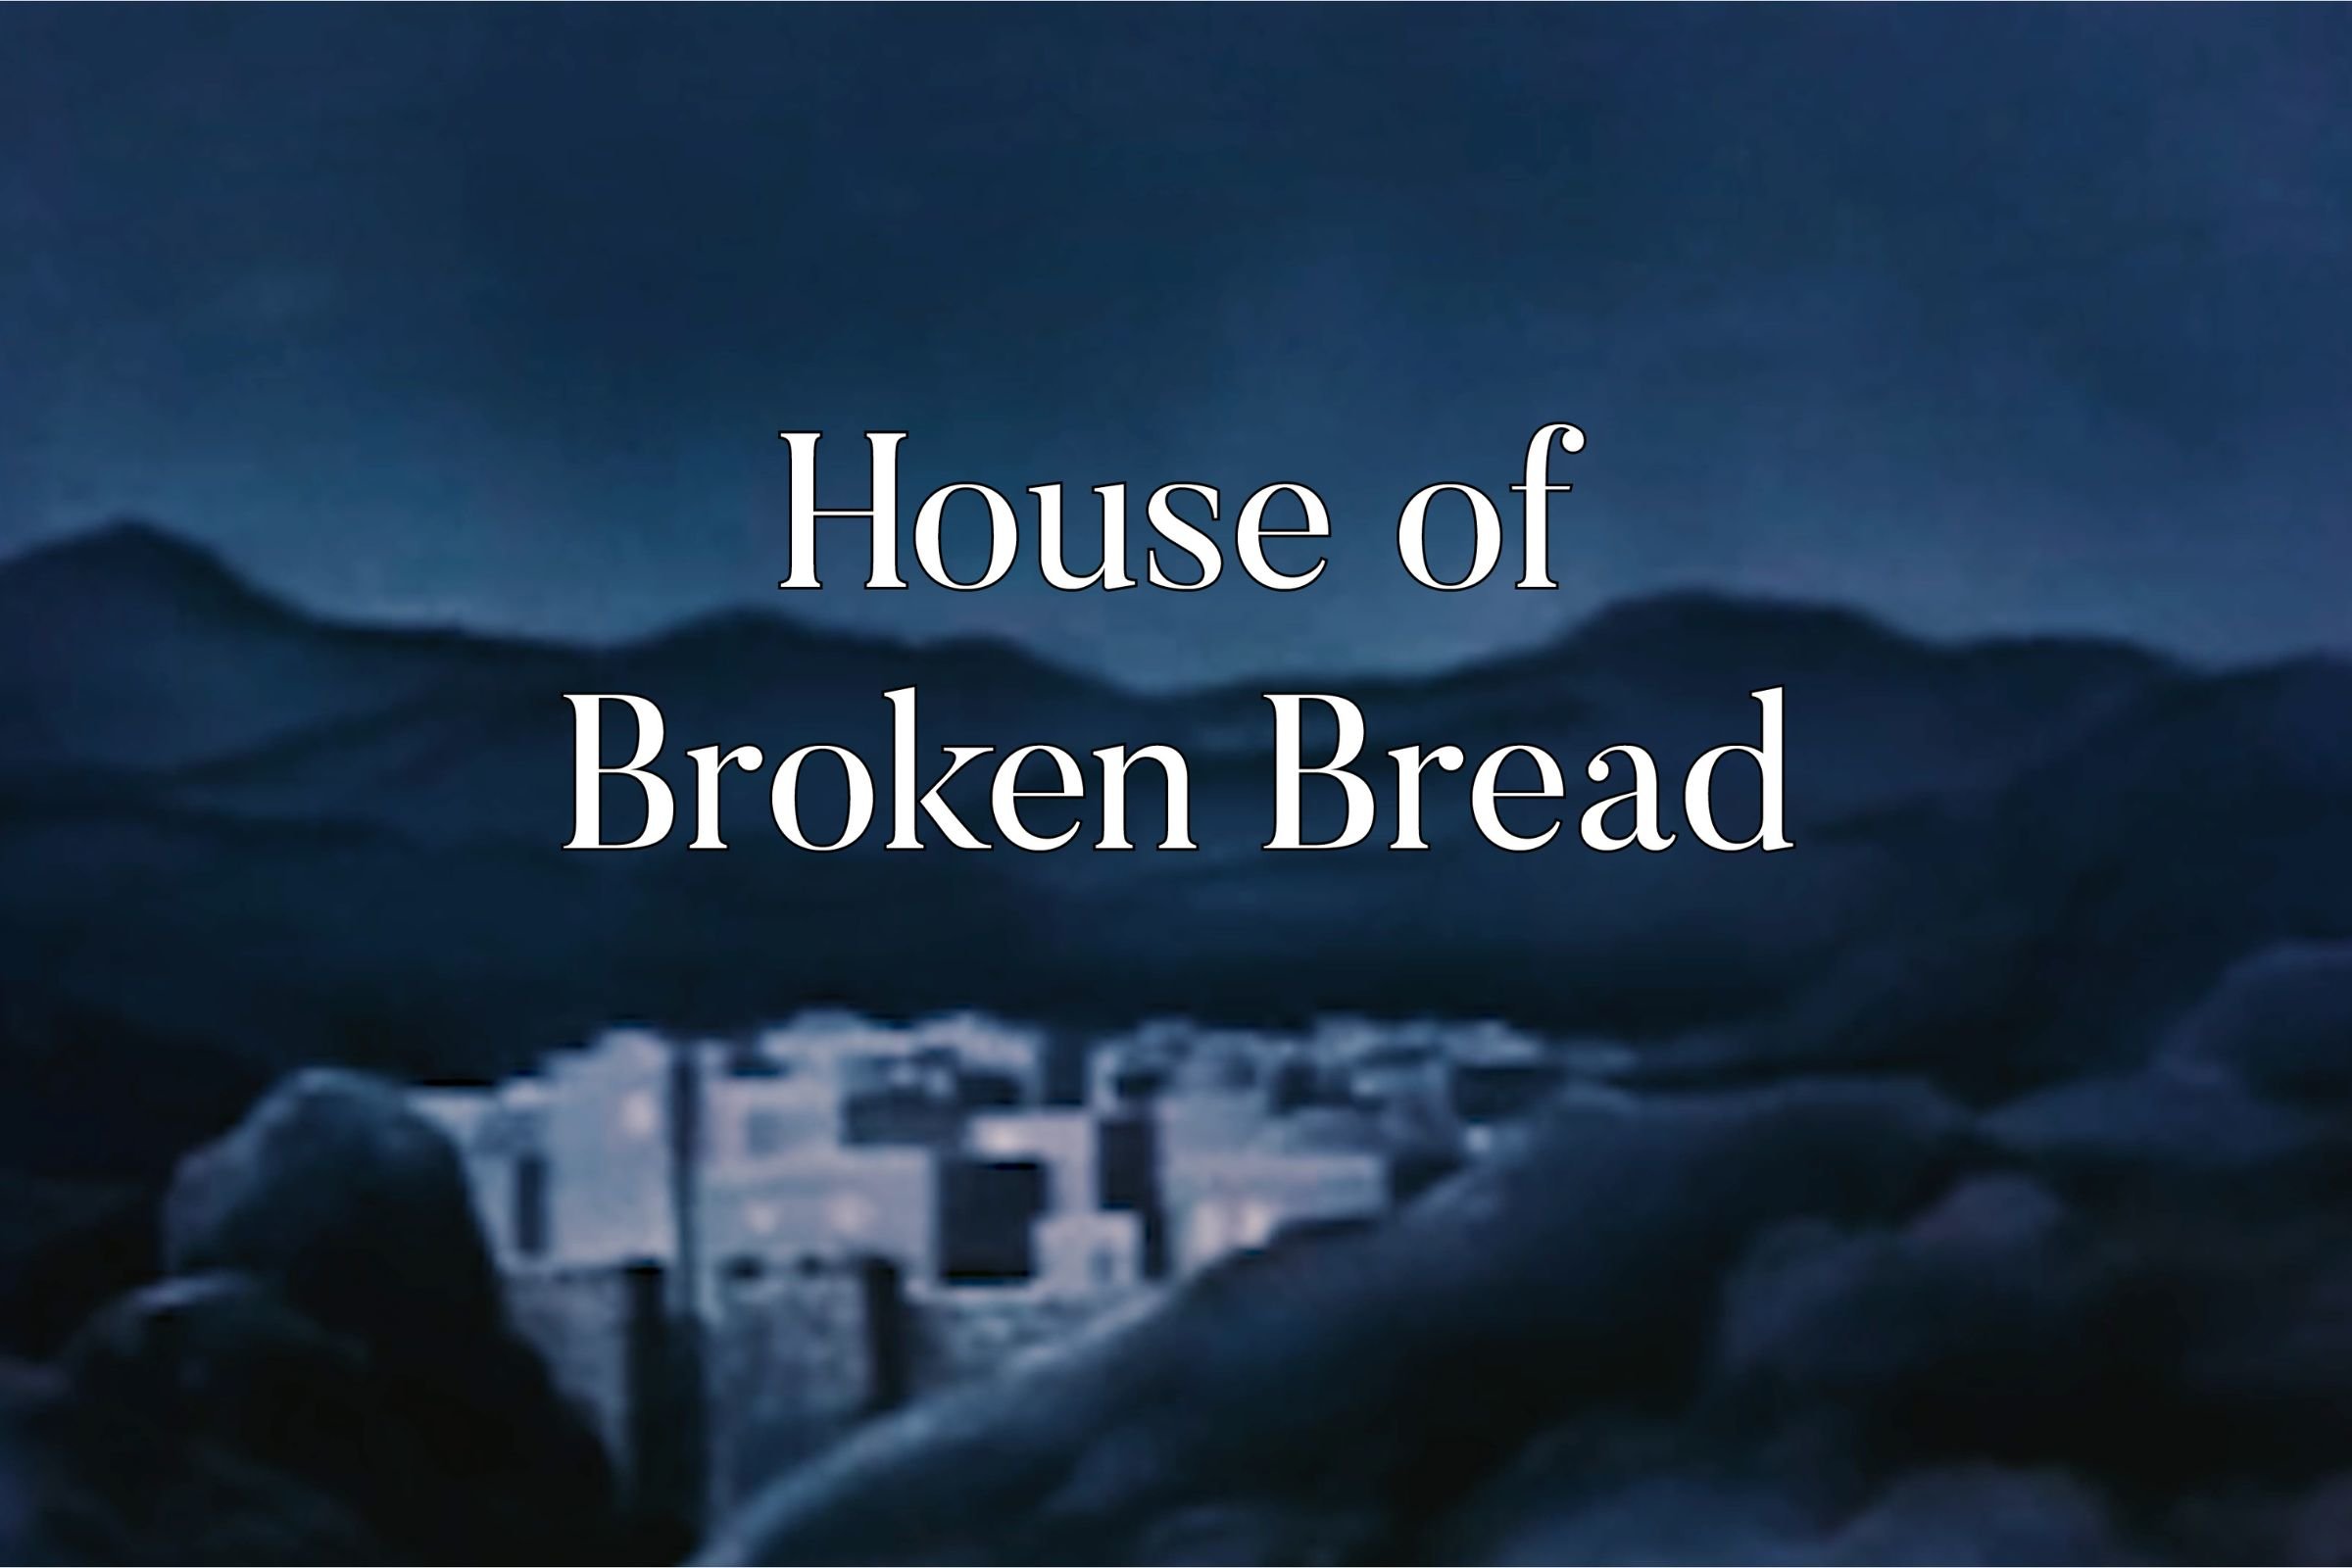 House of Broken Bread: A Christmas Poem